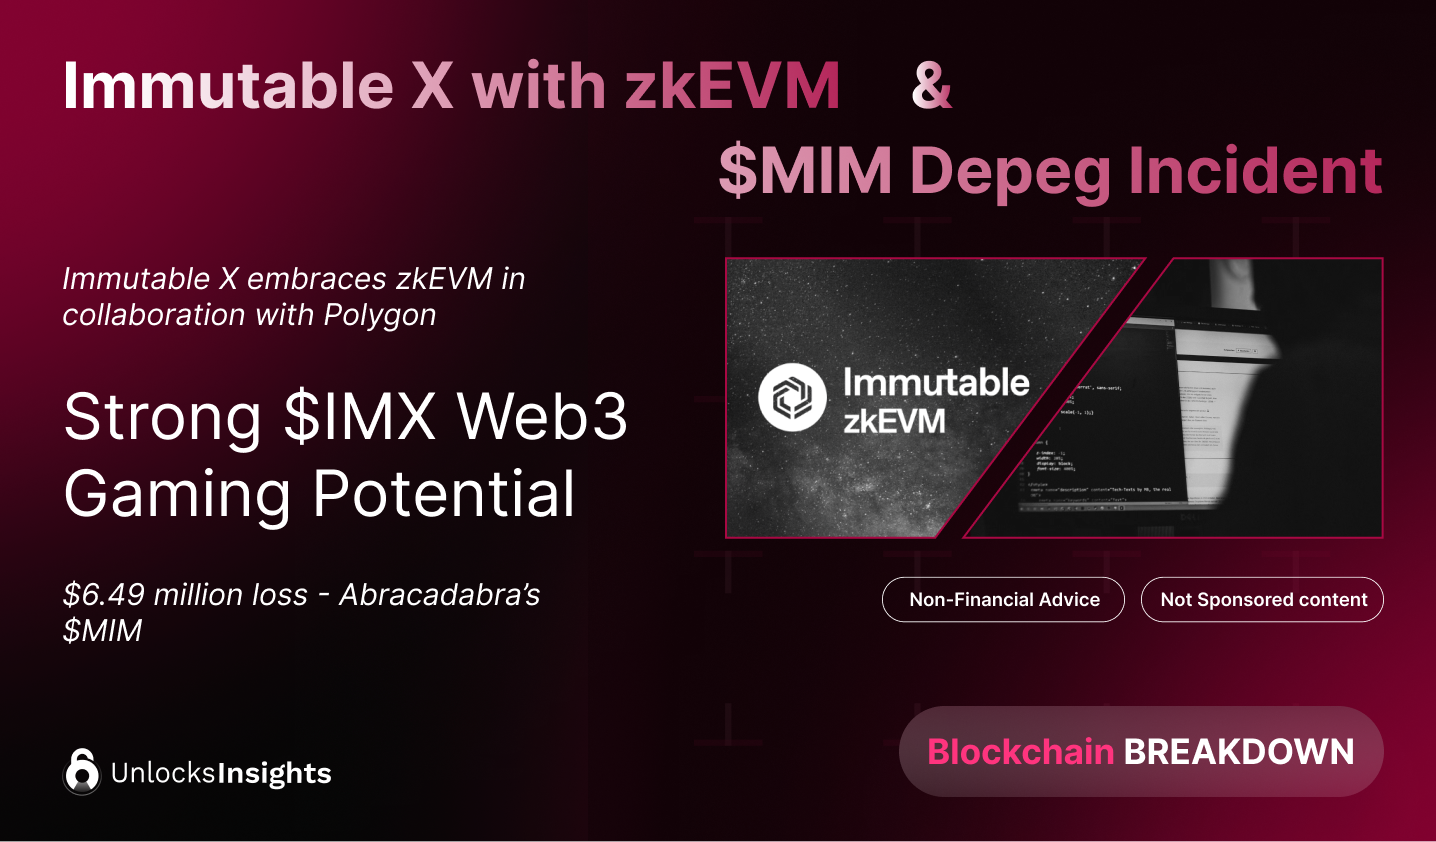 Lastest Update on ImmutableX zkEVM & $MIM Depeg Incident